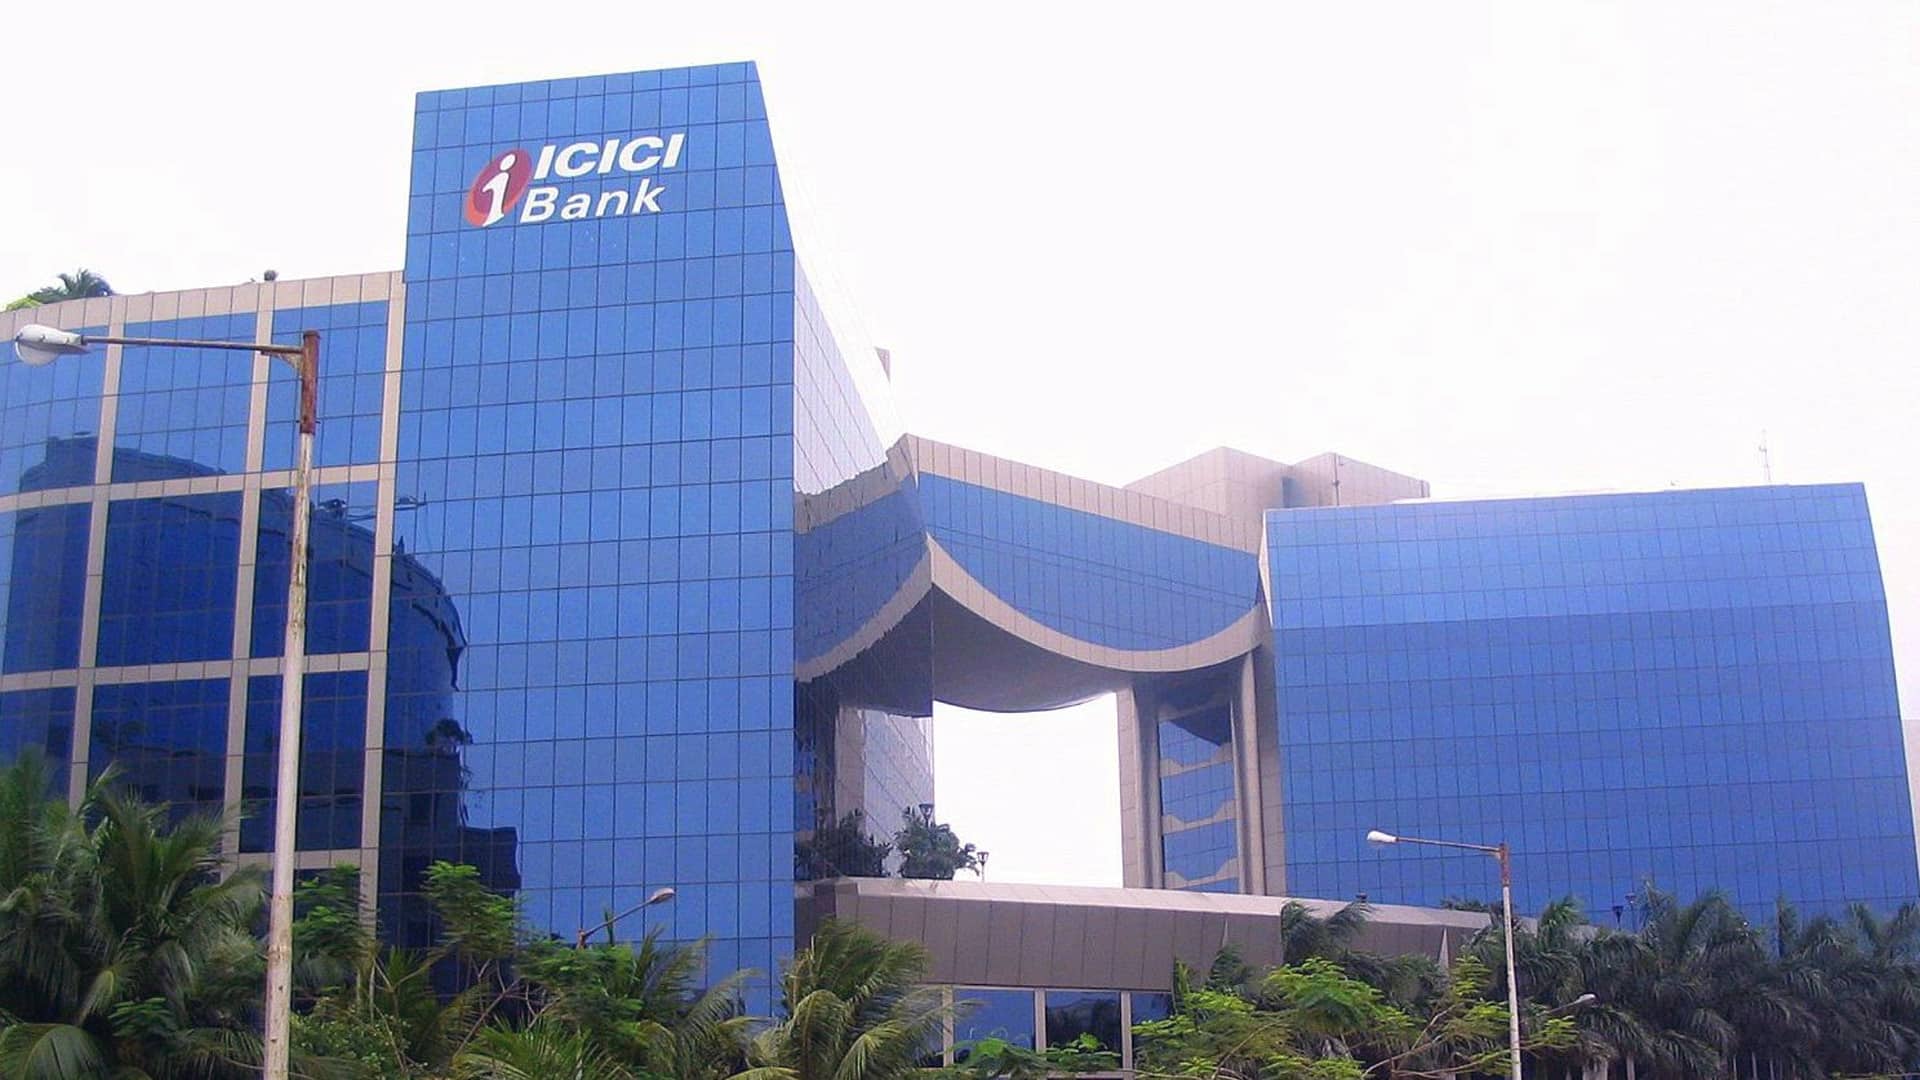 ICICI Bank raises Rs 5,000 crore via bonds